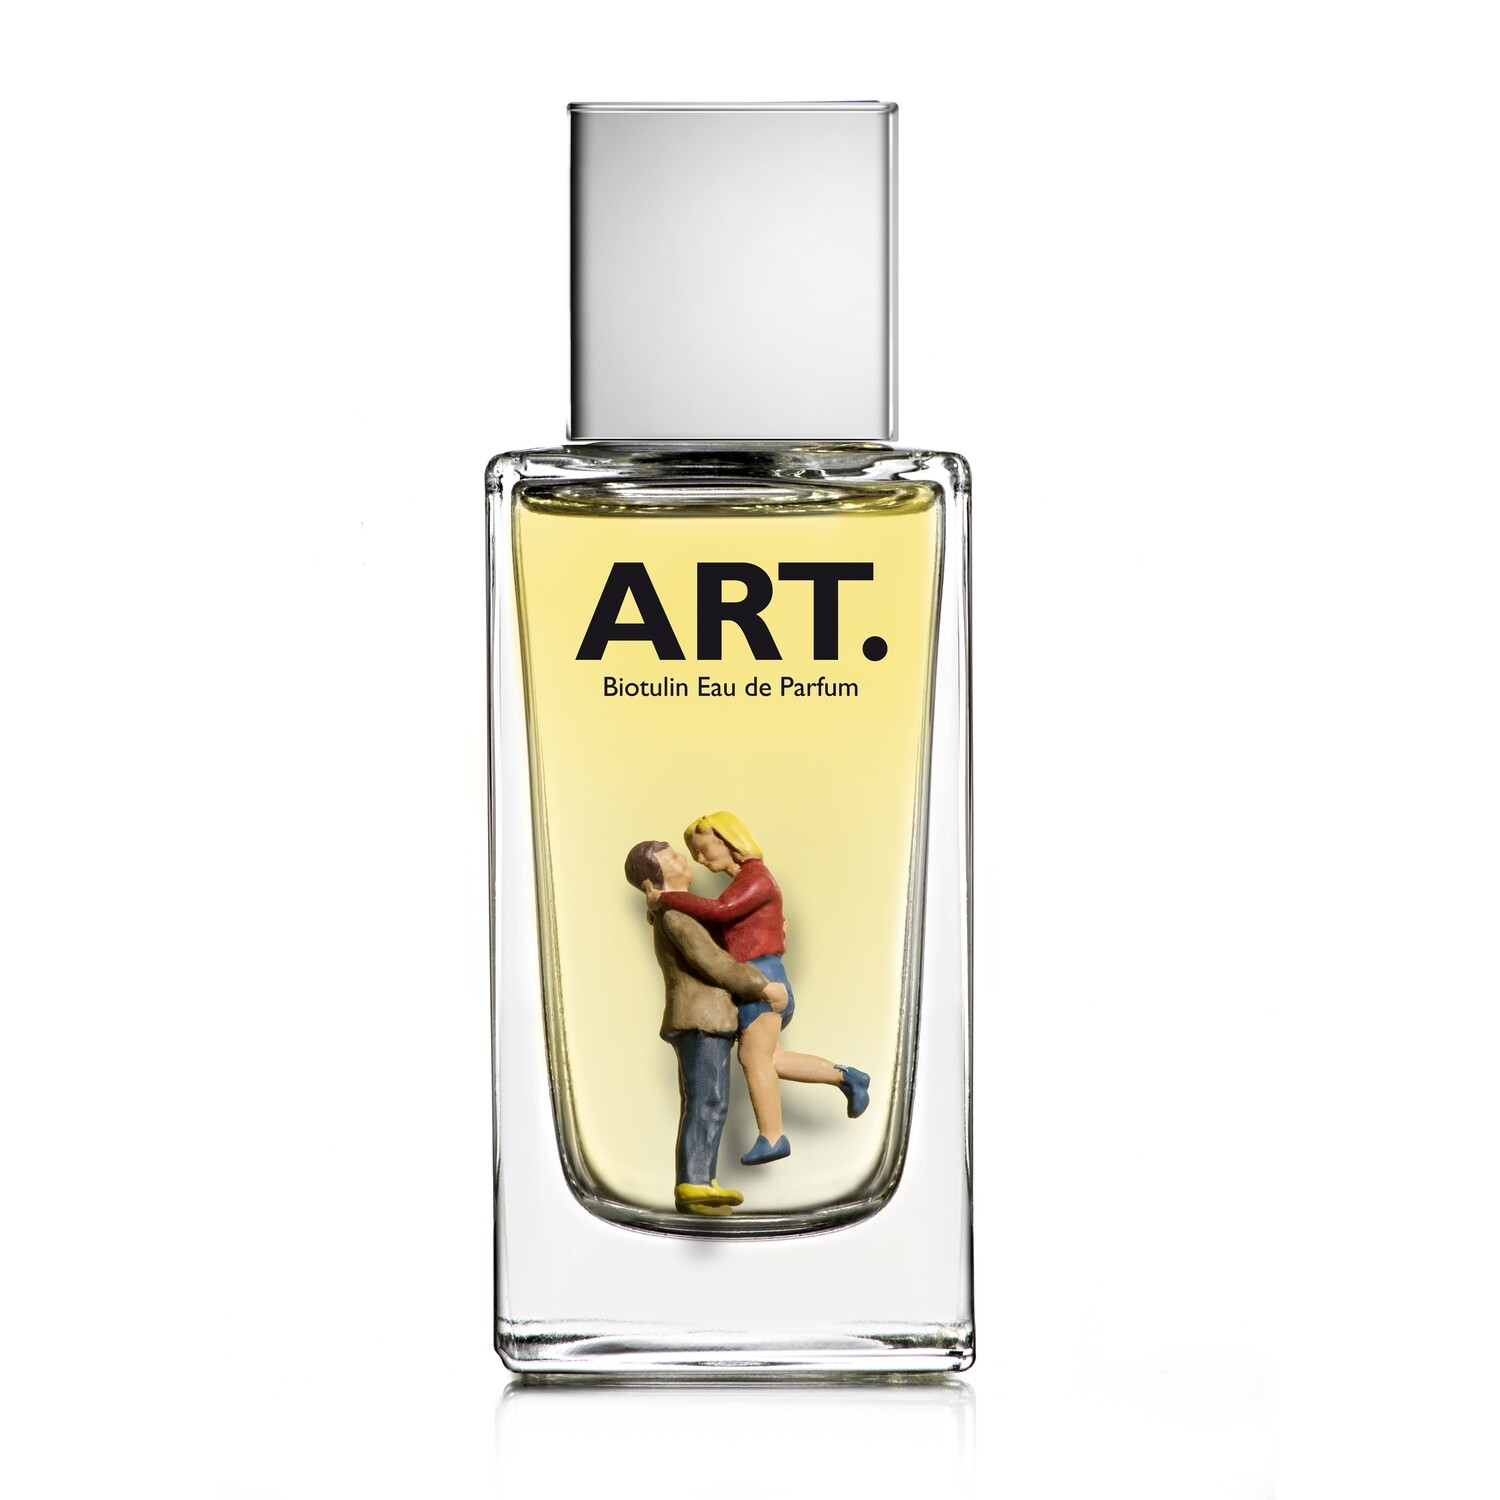 ART. Biotulin Eau de Parfum* (50ml)